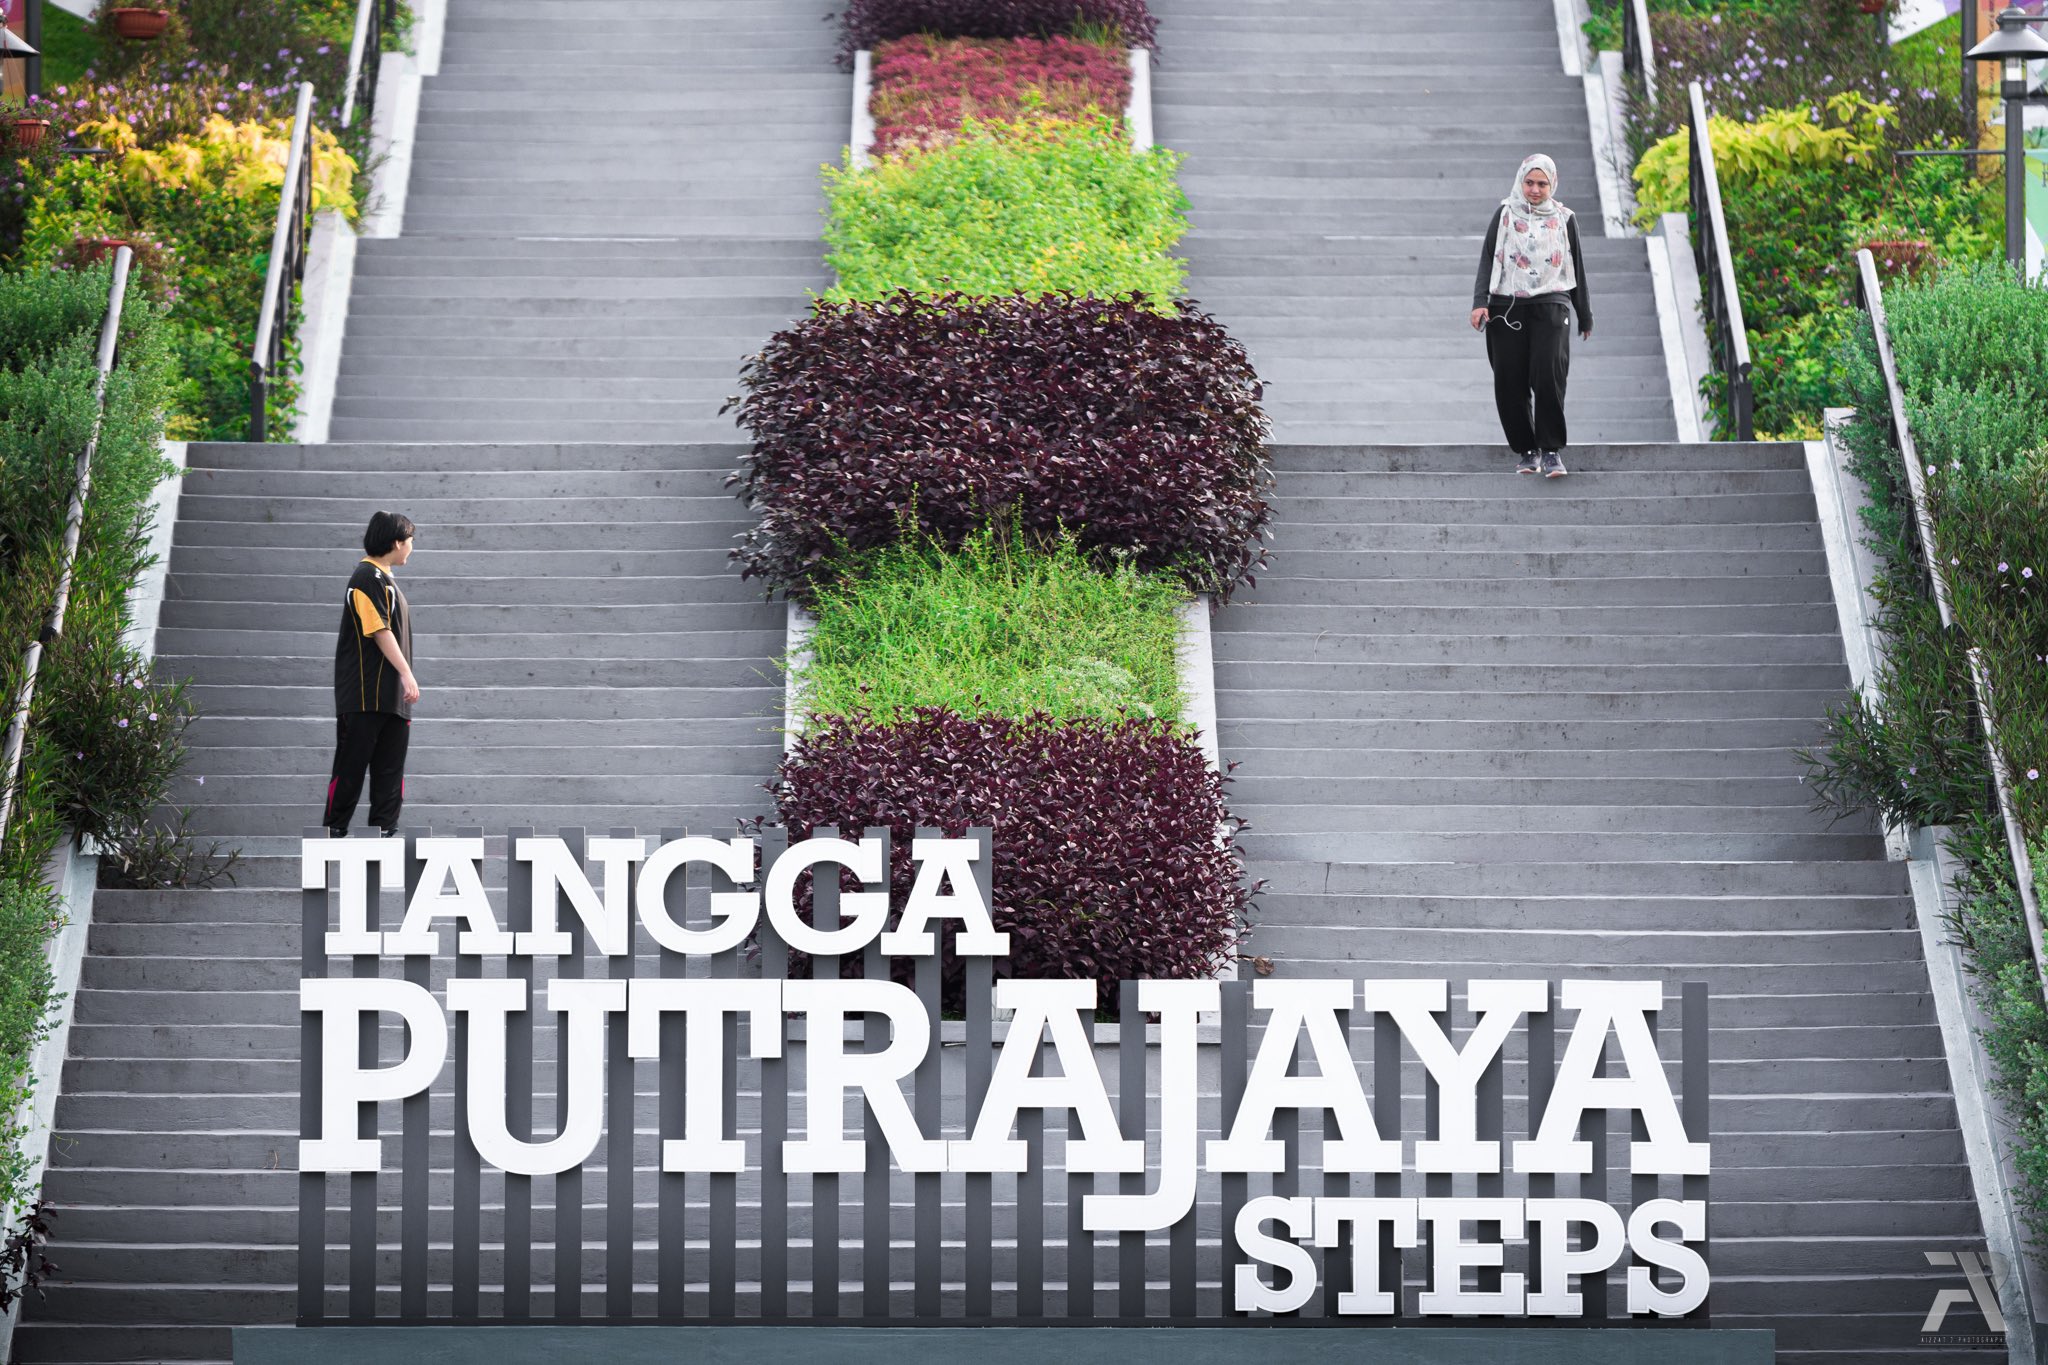 Tangga putrajaya steps